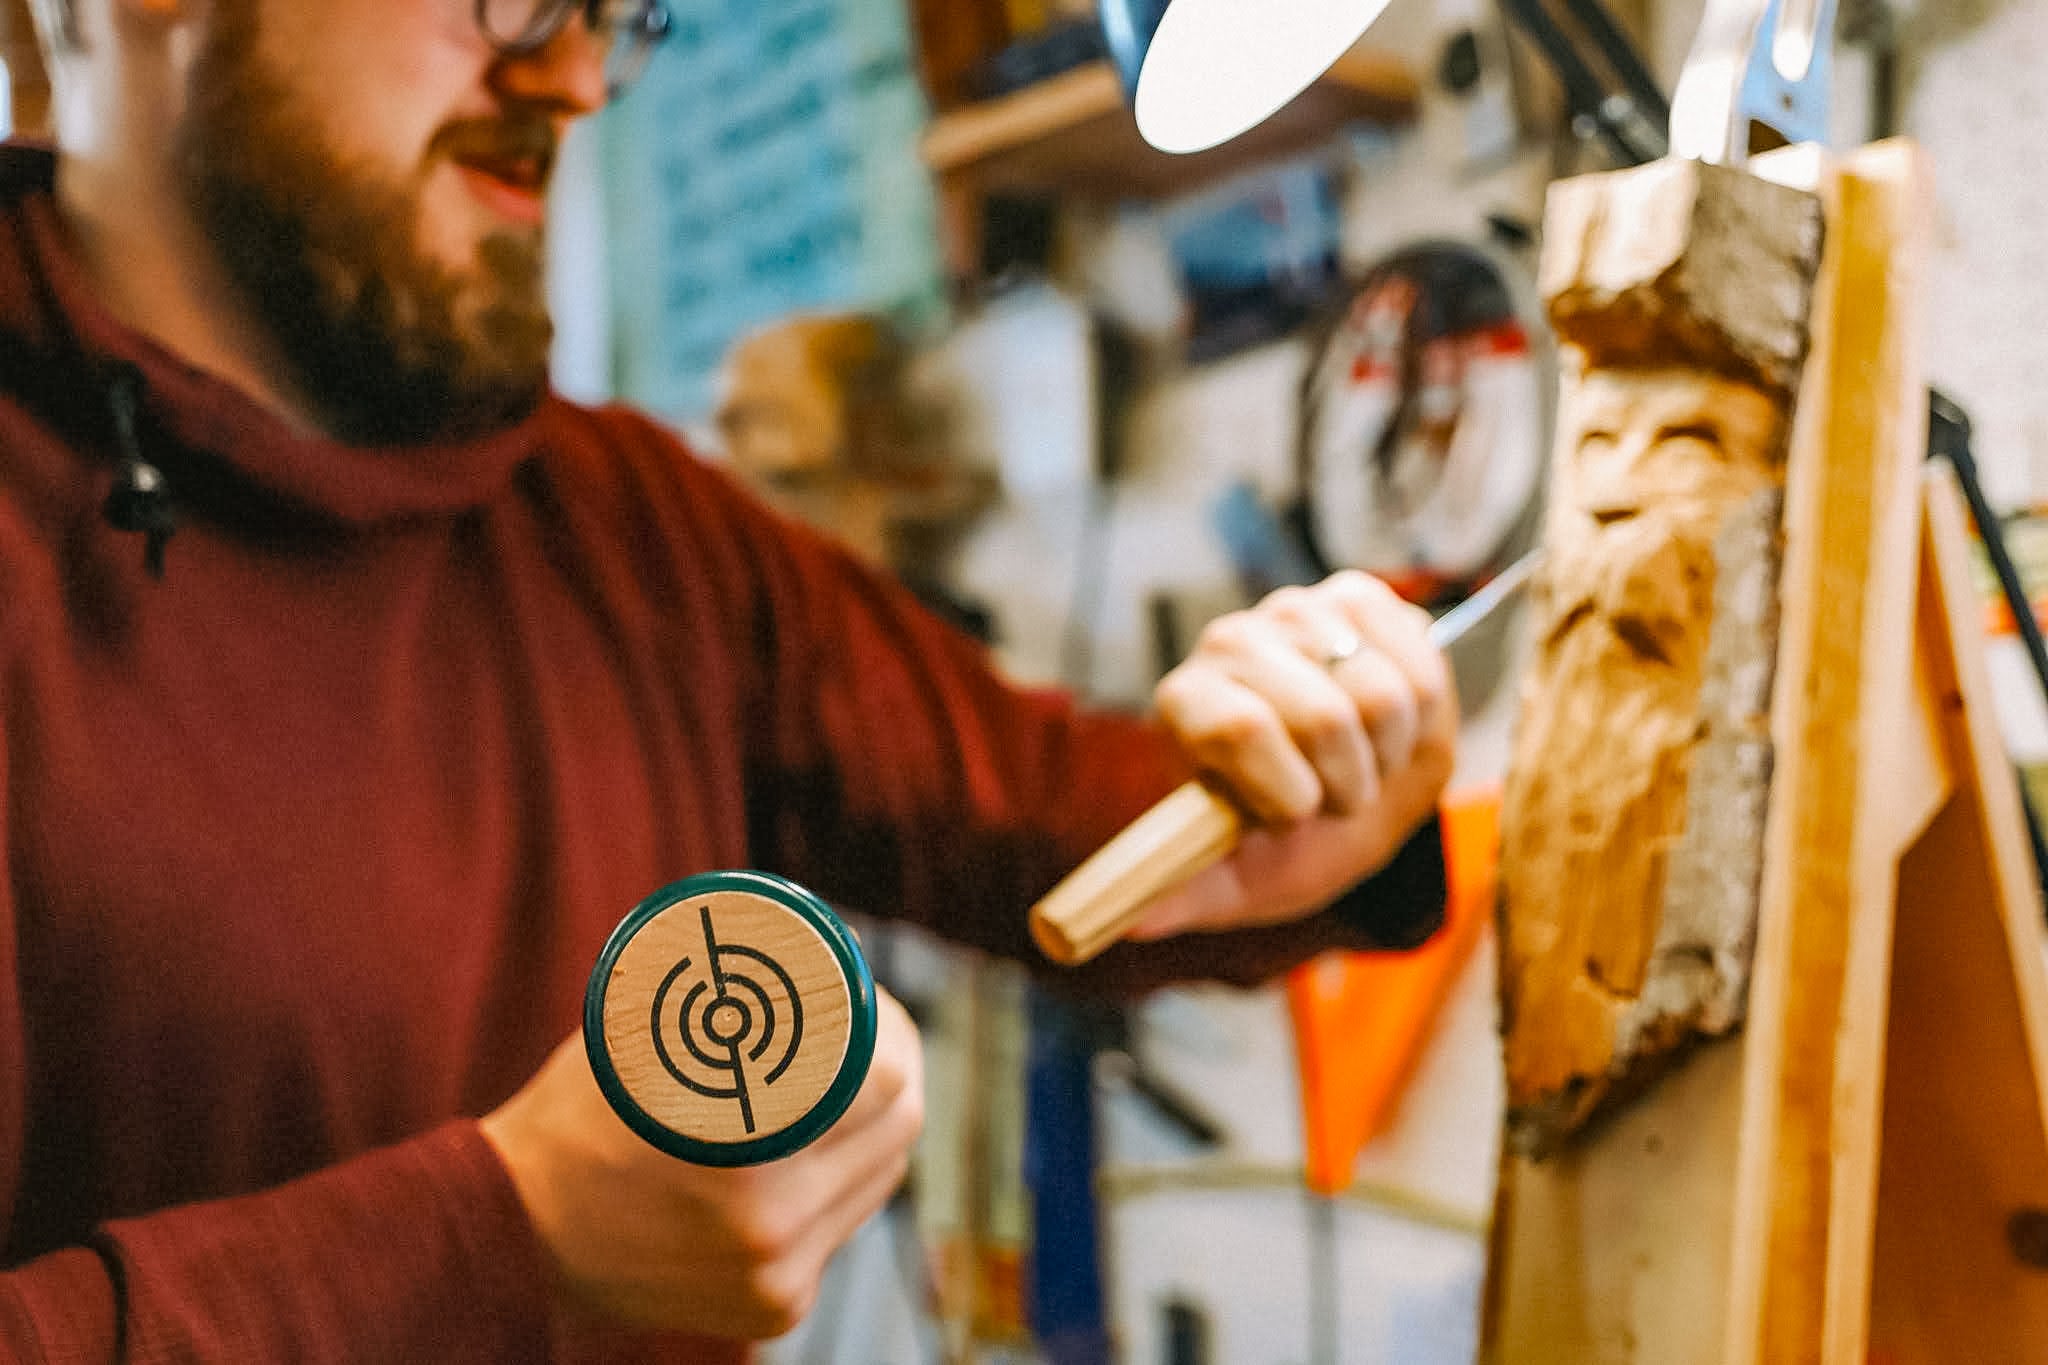 Precision Wood Carving Mallet - 12 Ounces